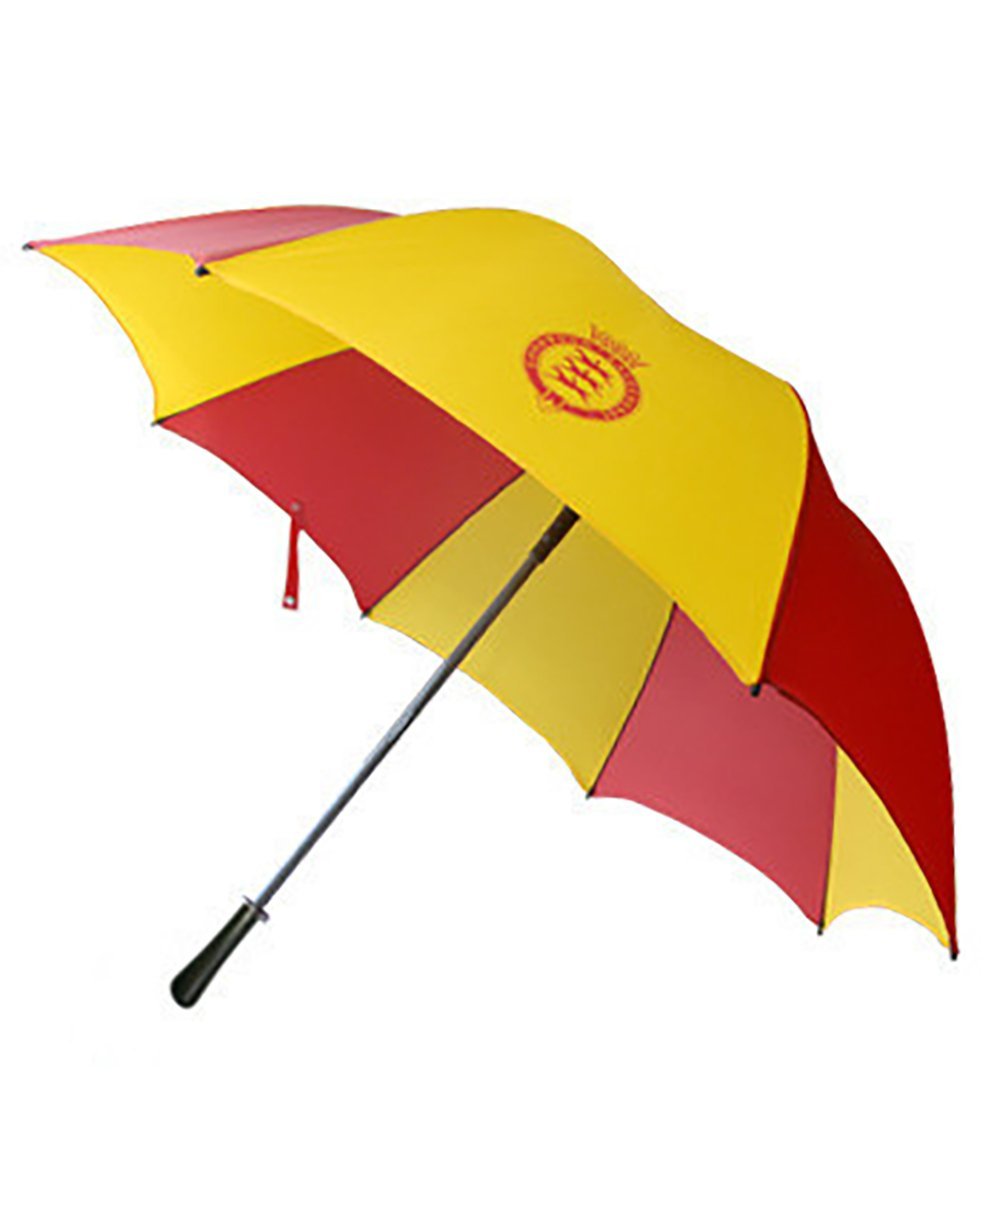 Goodwood Racecourse Stubbs Horses Red Yellow Umbrella